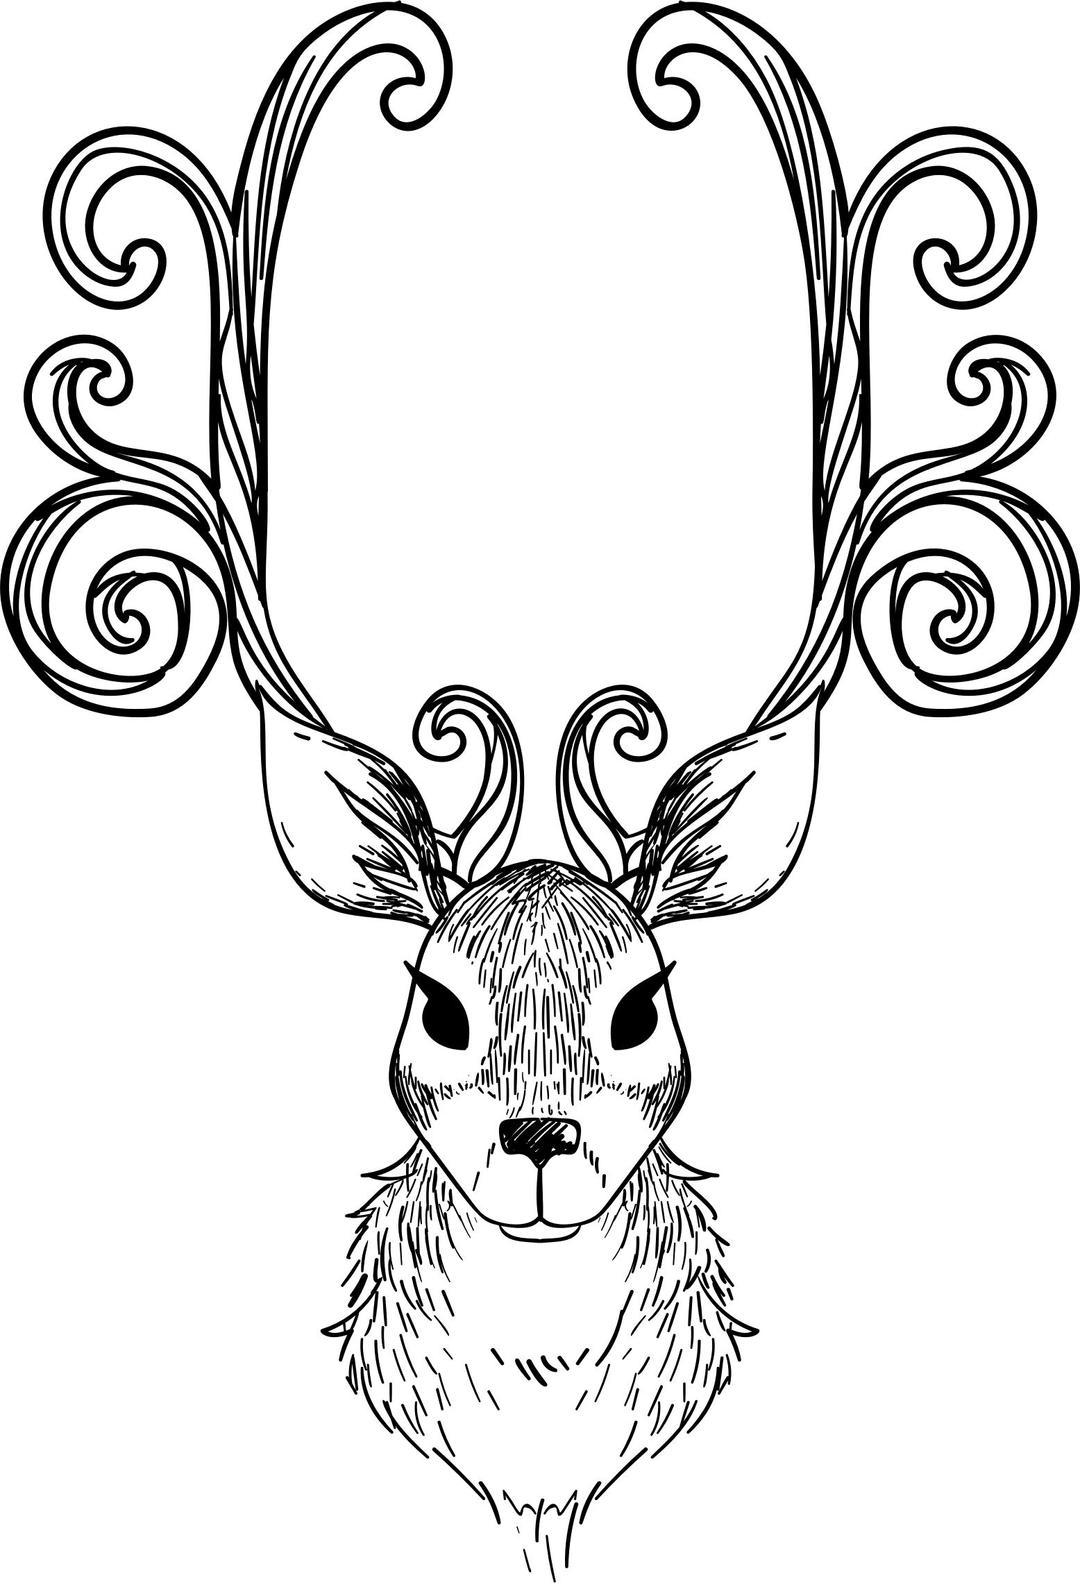 Stylized Reindeer Head Line Art png transparent